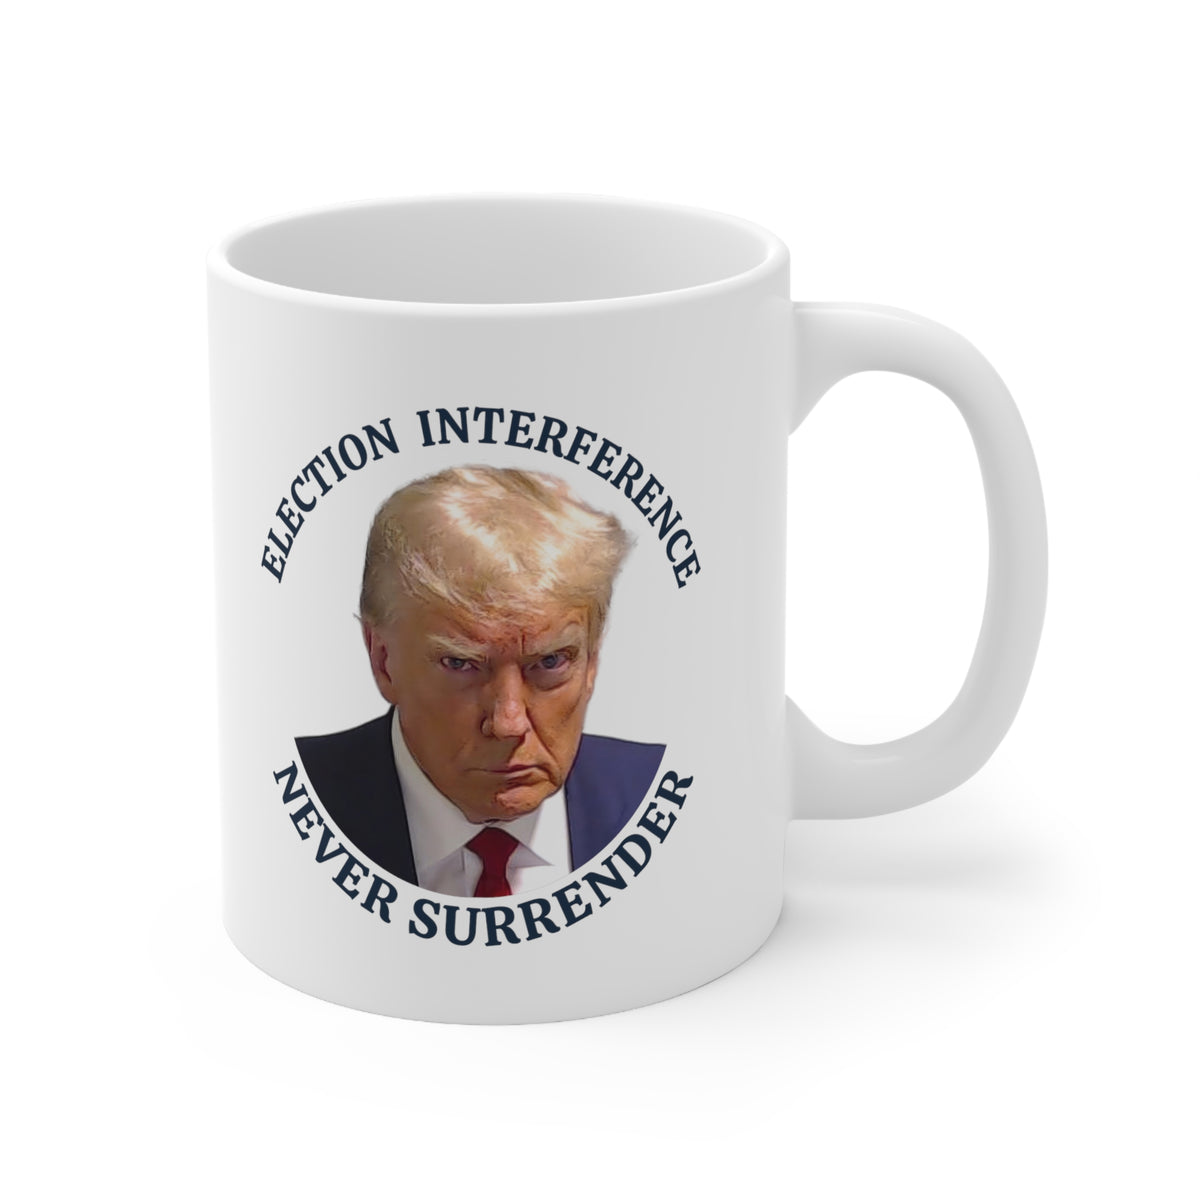 Trump Mug Shot Mug - Election Interference, Never Surrender - Ceramic Mug 11oz